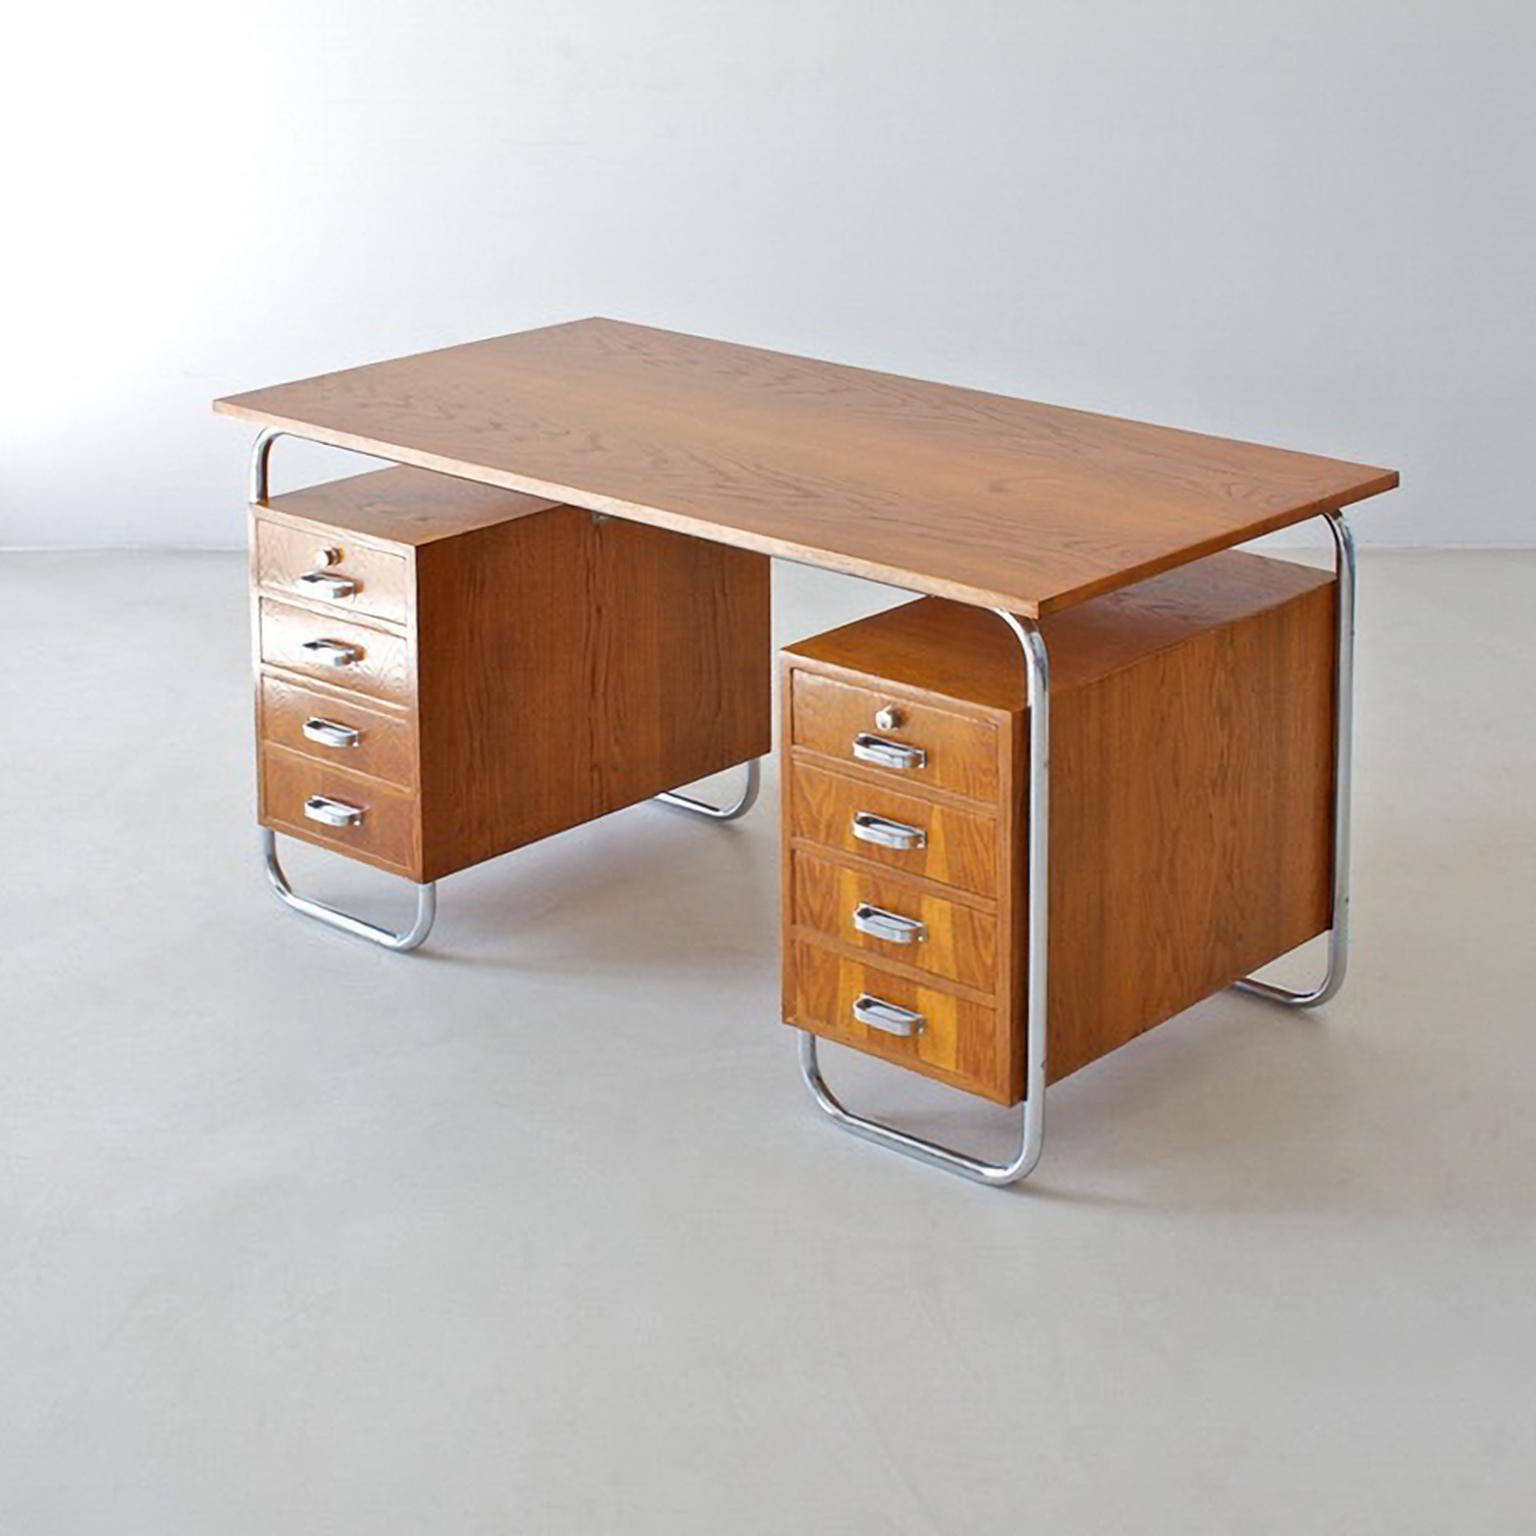 Modernist Tubular Steel Desk with 2 Chests of Drawers, Chromed Metal, Oak Veneer In Good Condition For Sale In Berlin, DE